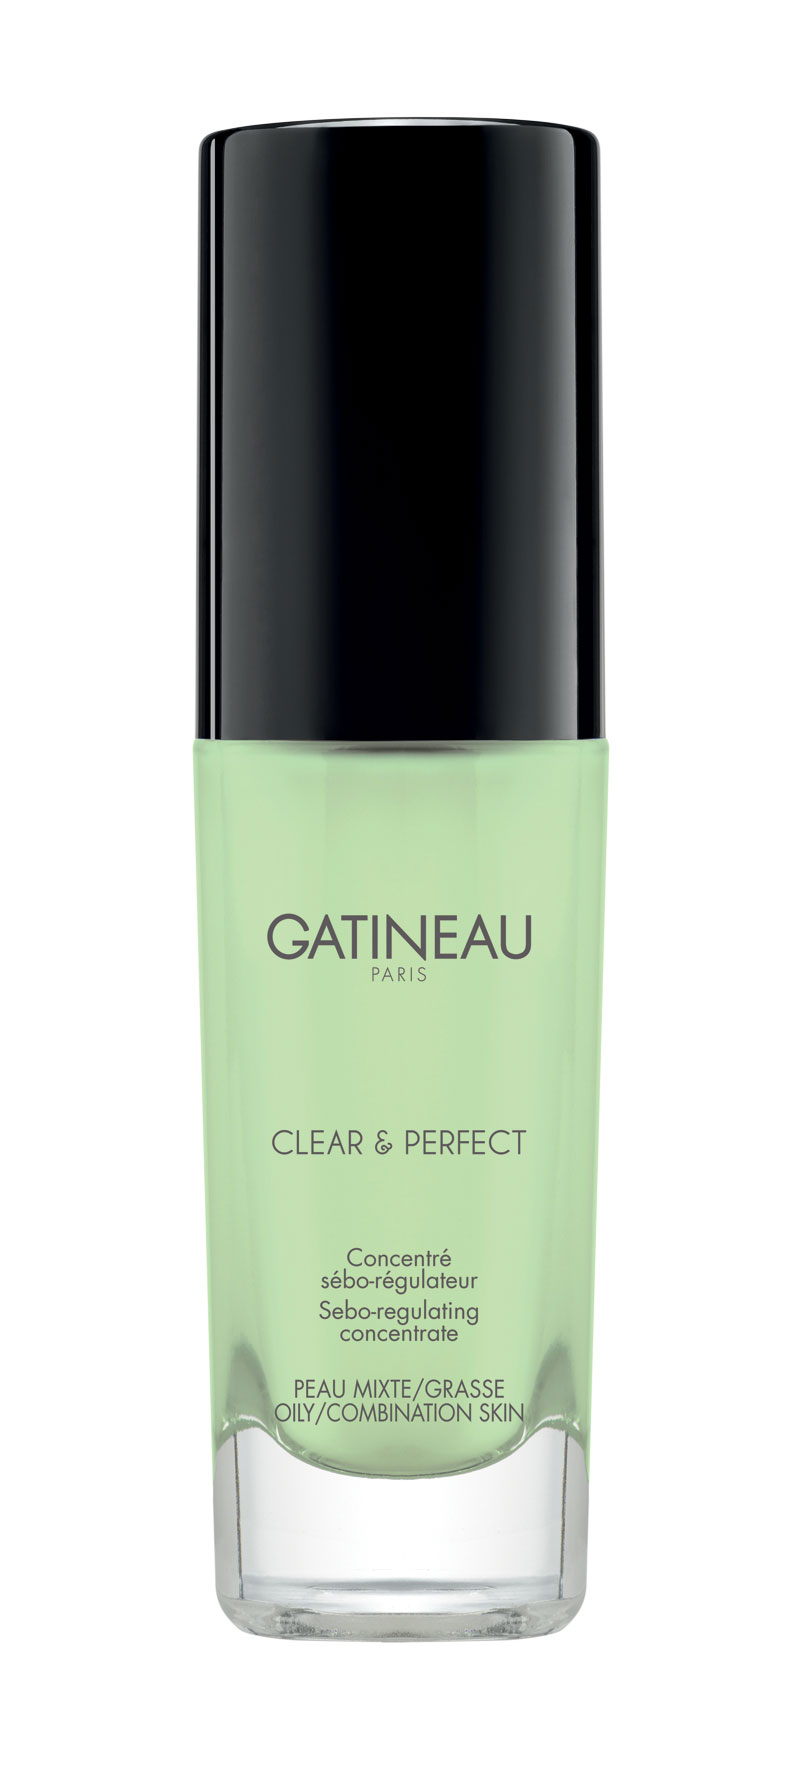 GATINEAU (PARIS) представляет продукты линии CLEAR&PERFECT